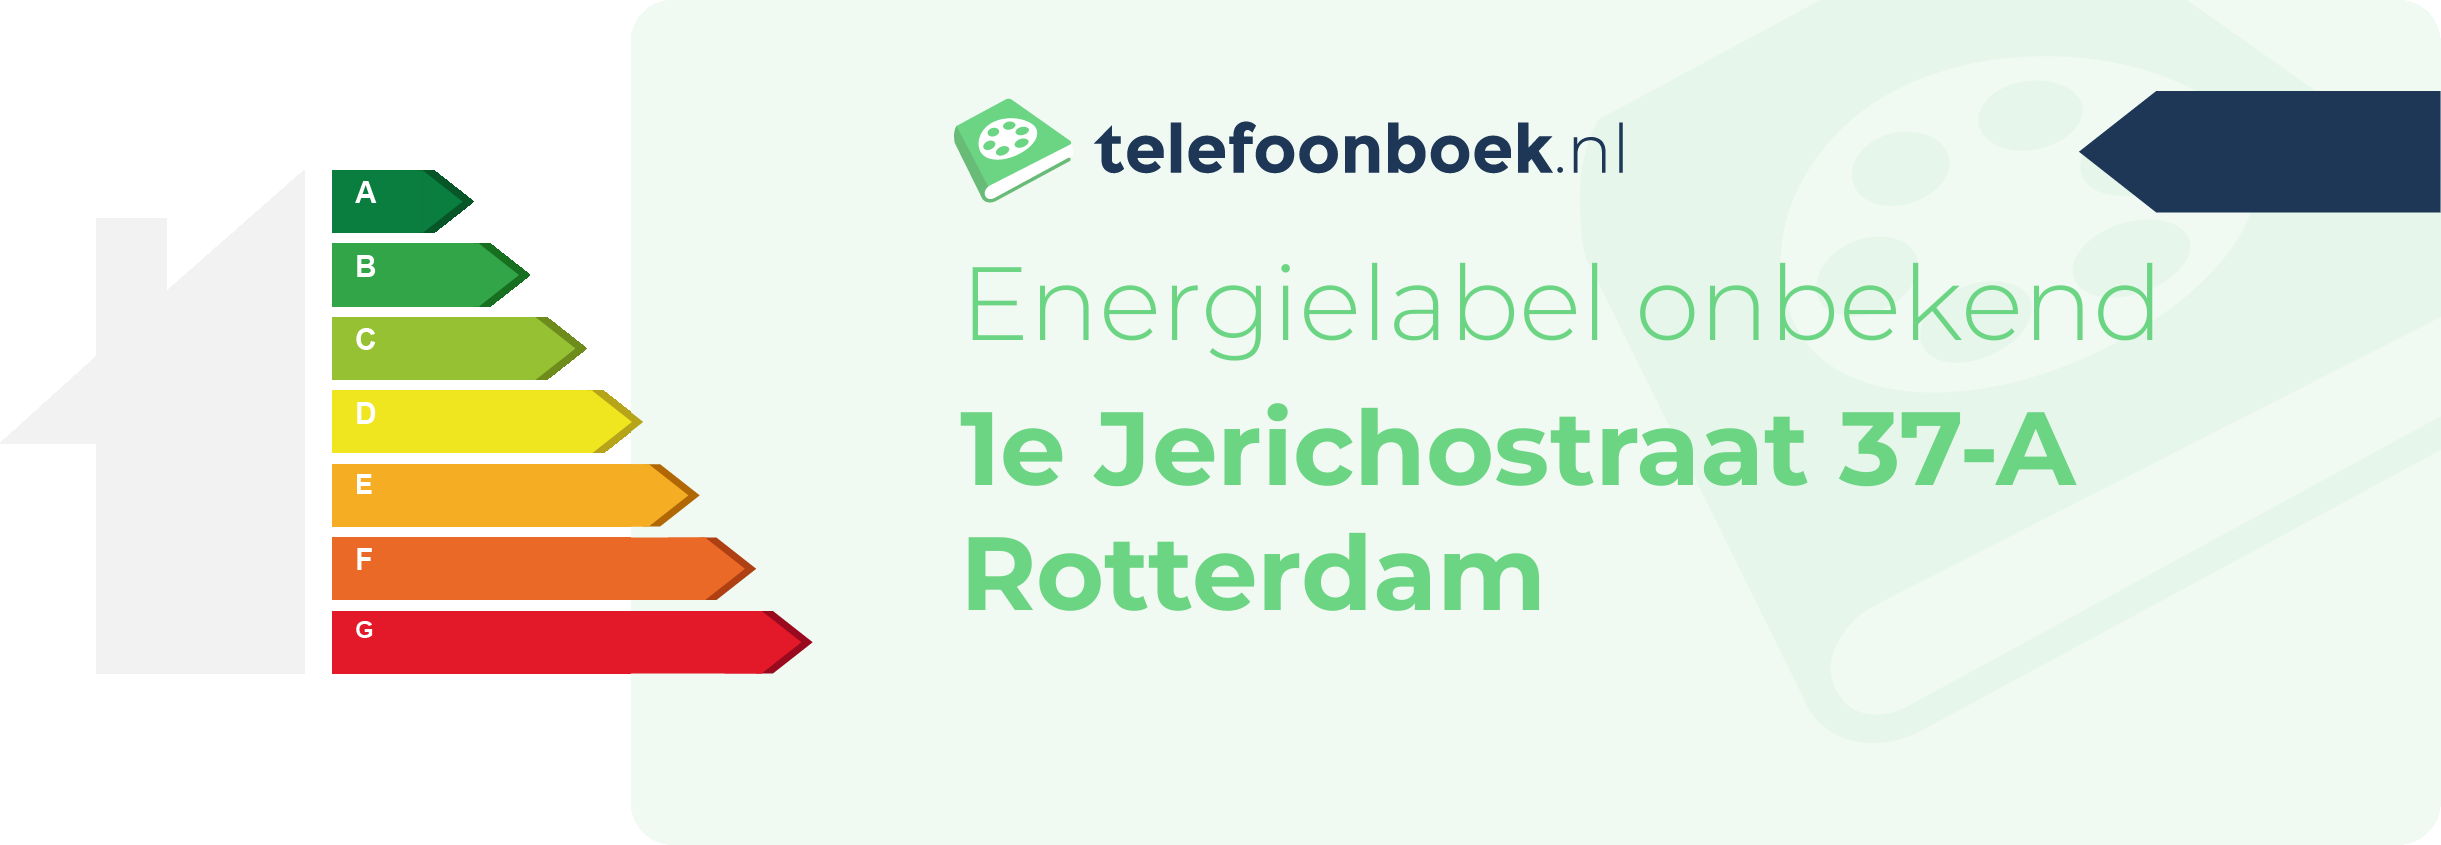 Energielabel 1e Jerichostraat 37-A Rotterdam